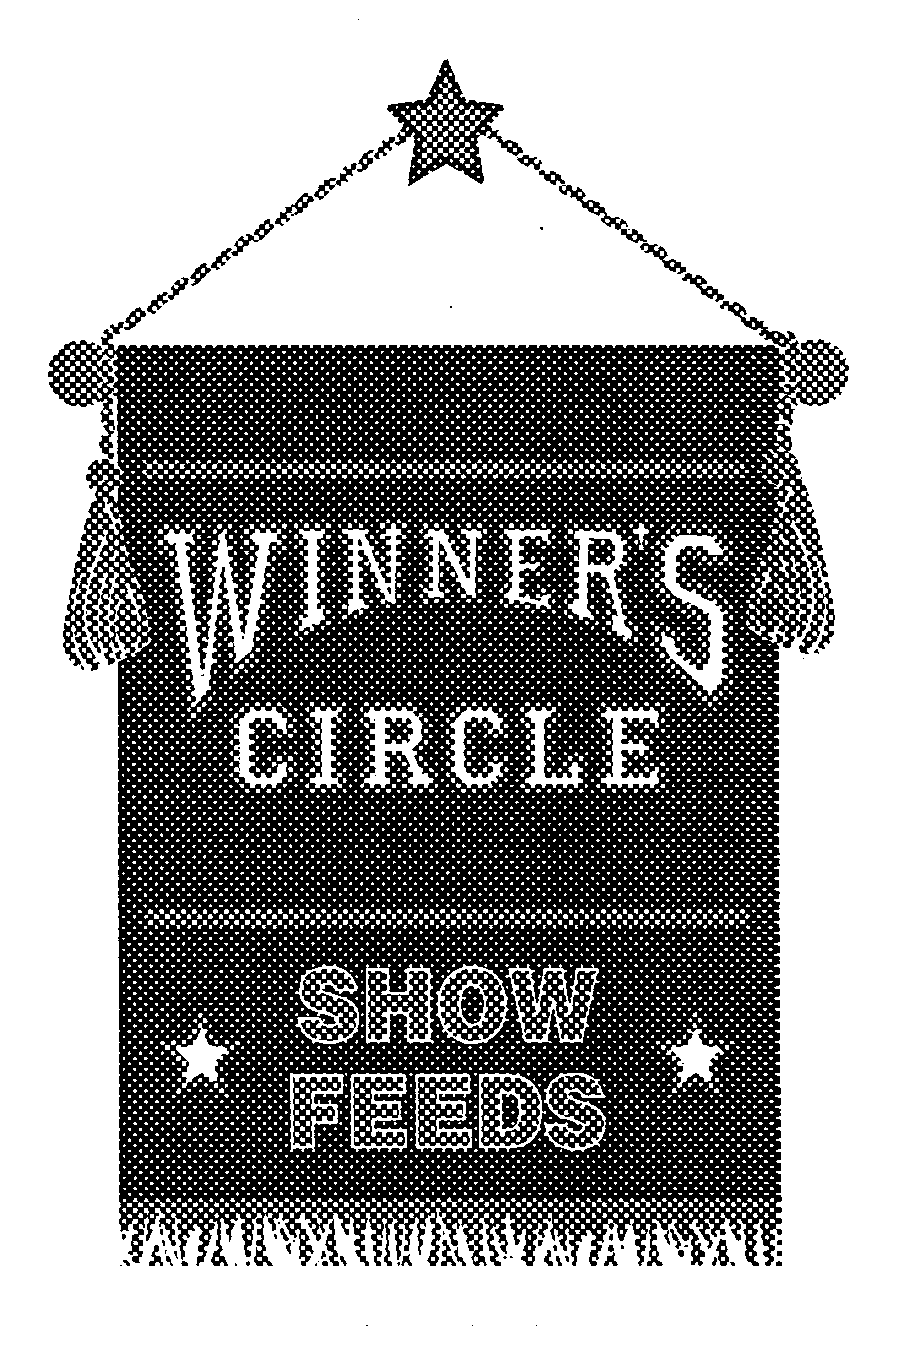  WINNER'S CIRCLE SHOW FEEDS